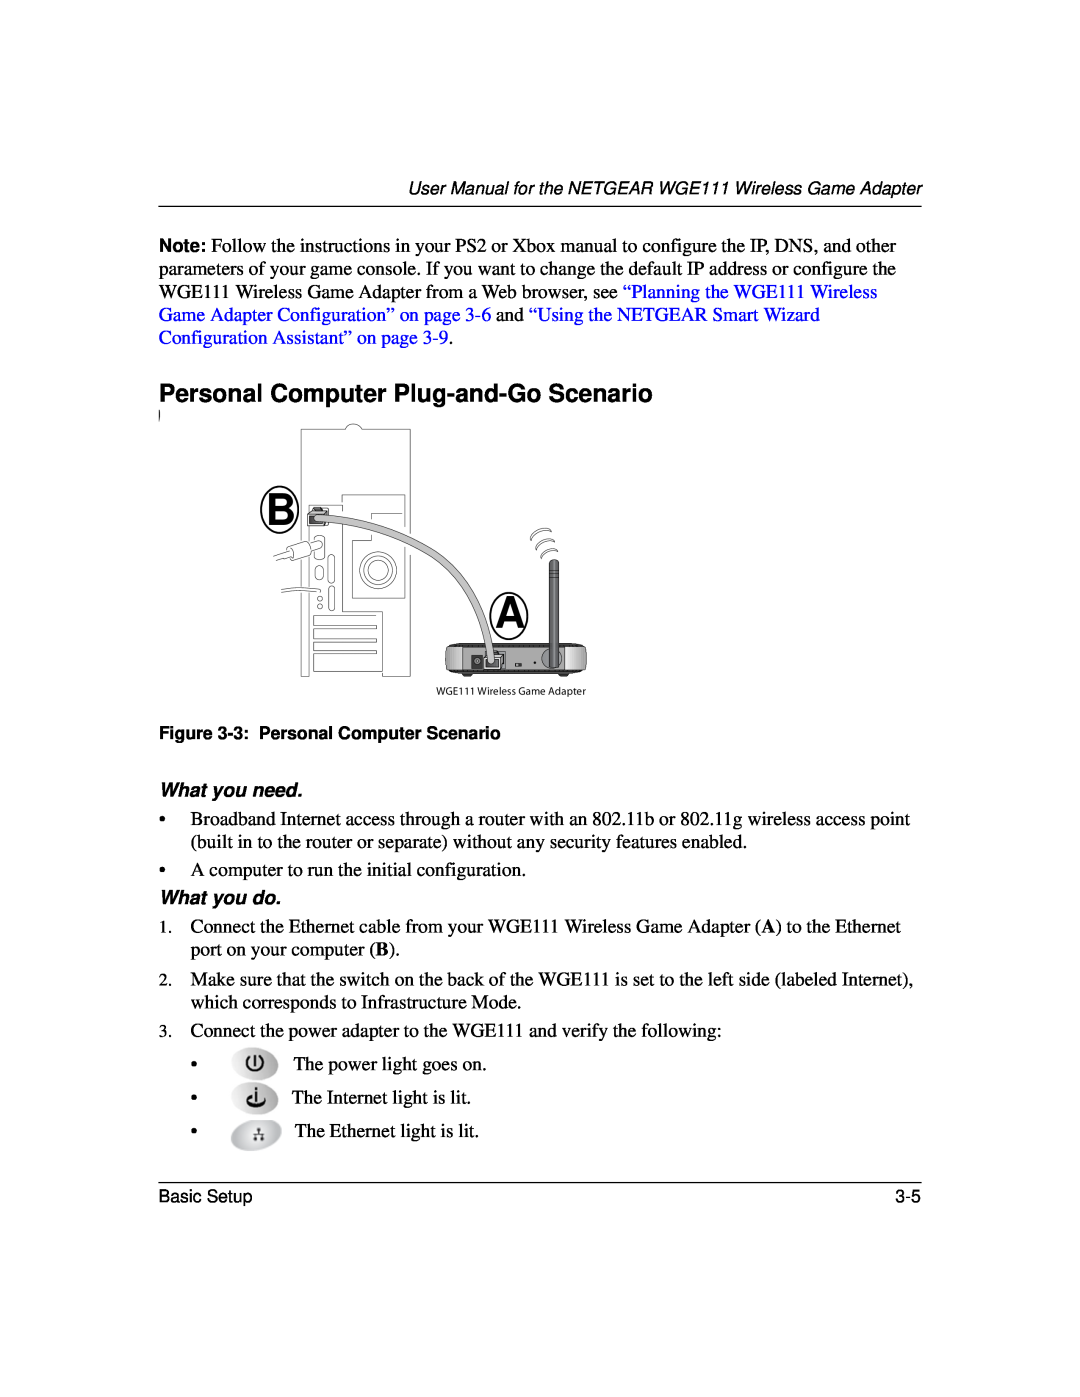 NETGEAR WGE111 user manual Personal Computer Plug-and-Go Scenario 